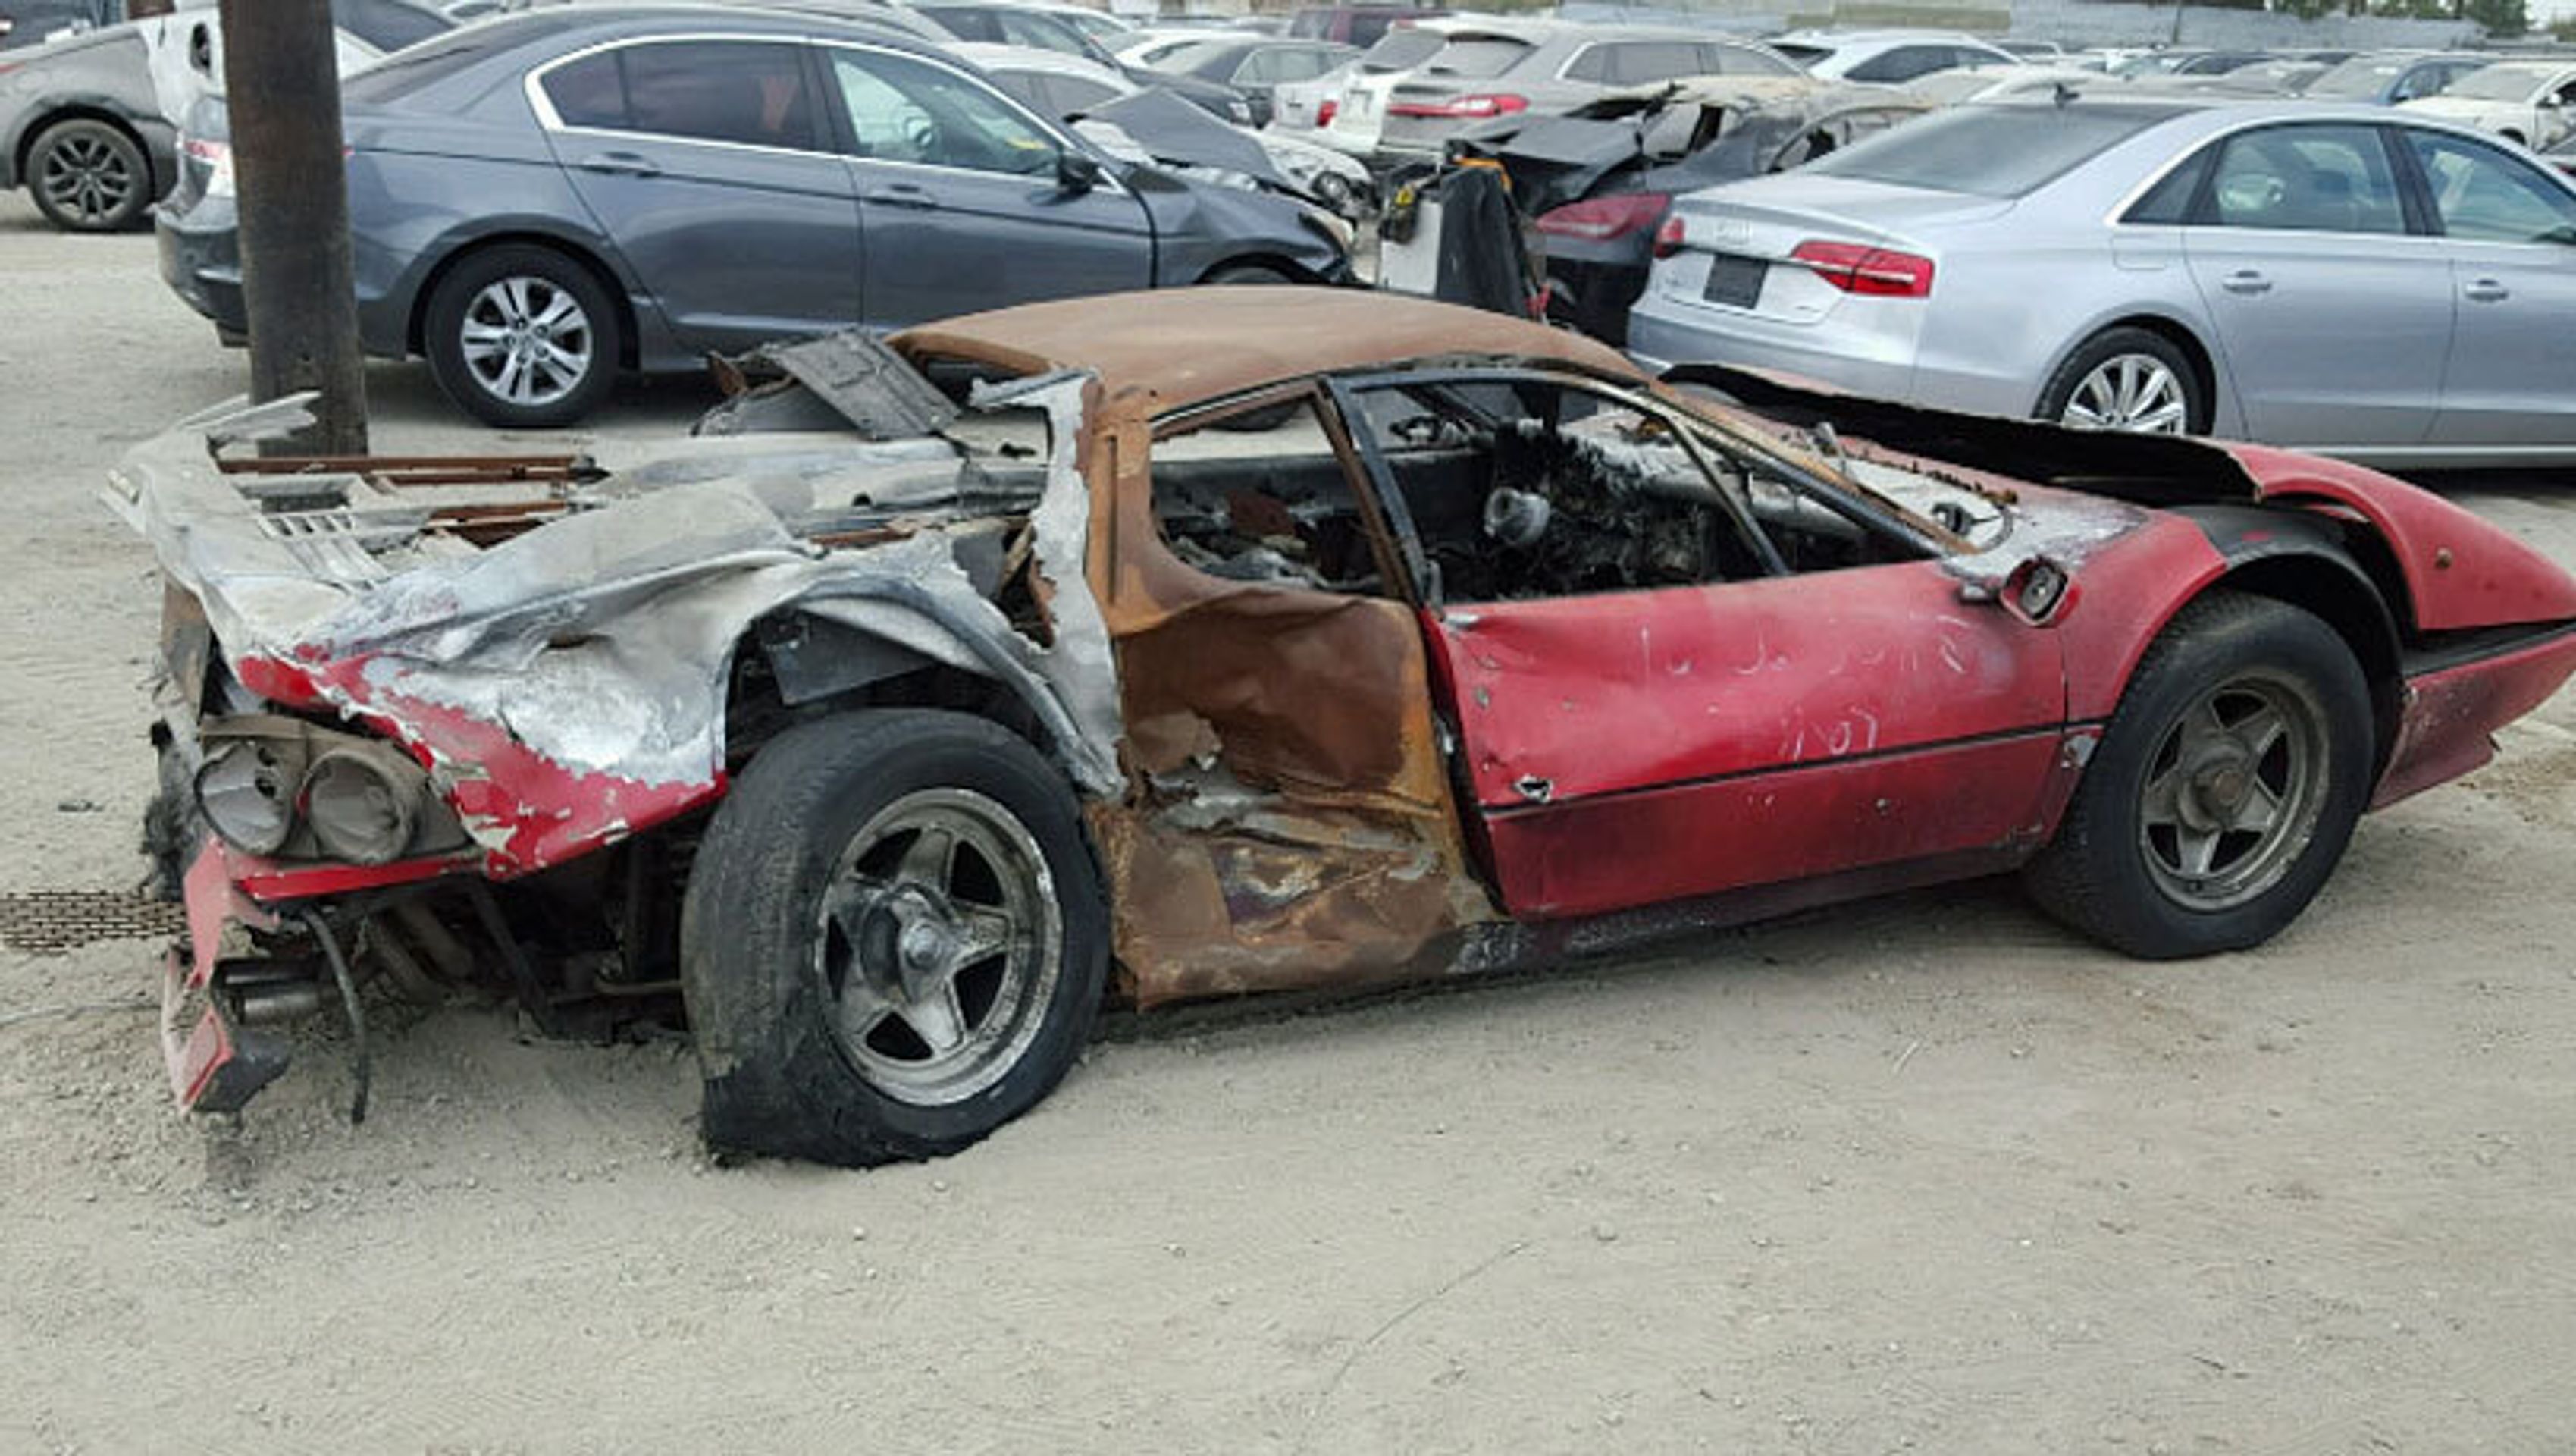 Ferrari - 15 - FOTOGALERIE: Torzo ohořelého Ferrari 512 bylo vydraženo (6/10)